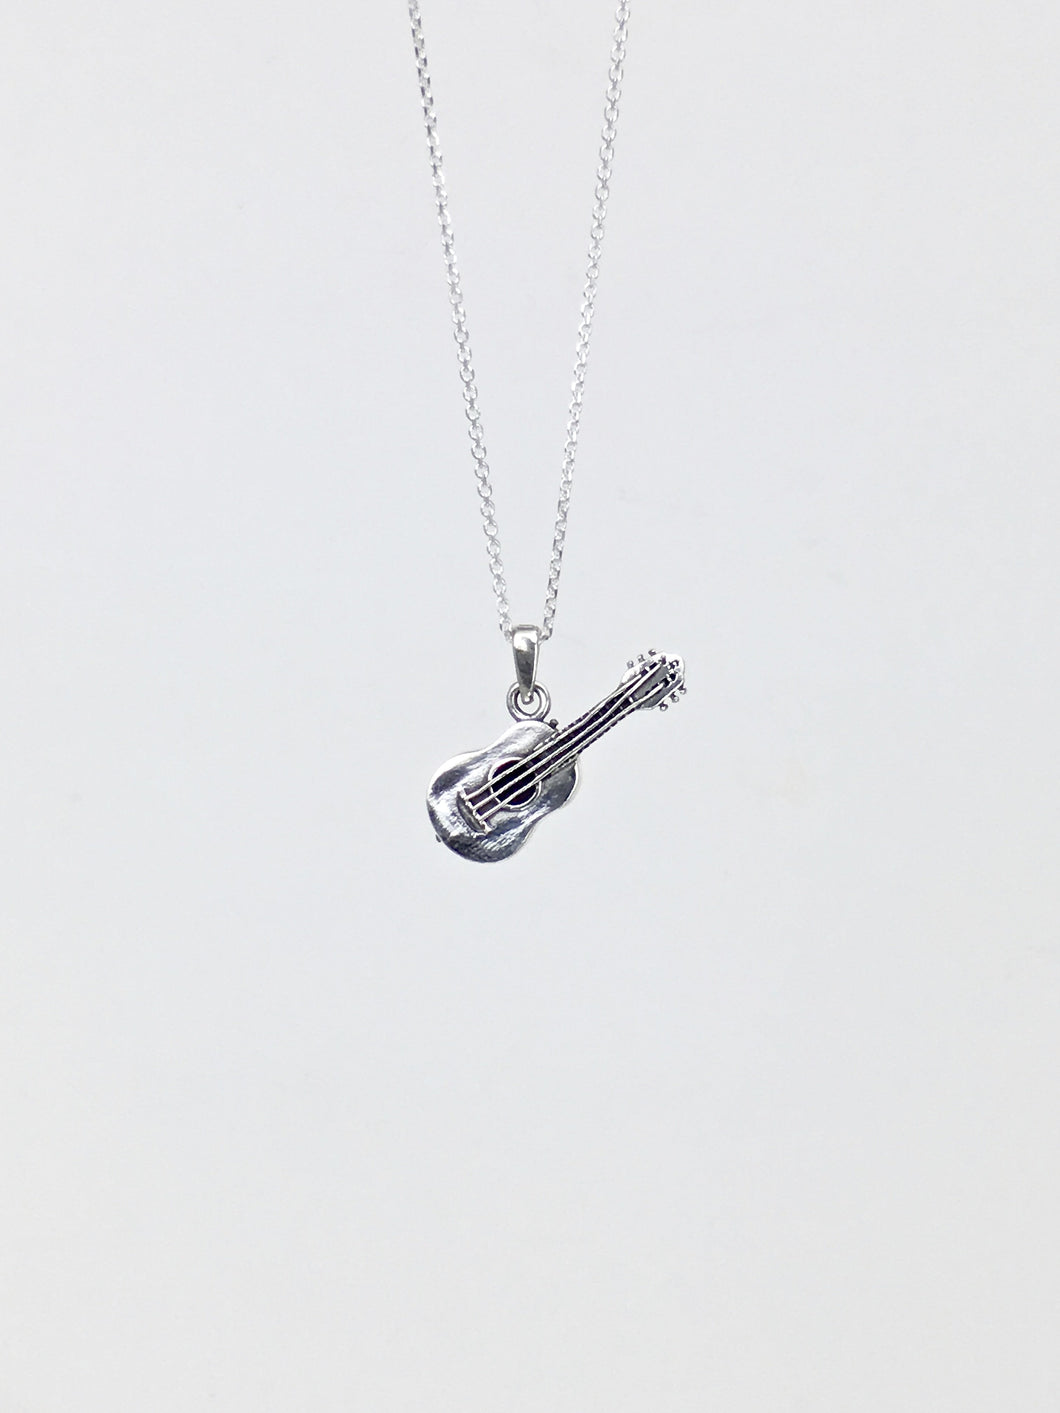 La Guitarrita  sterling silver pendant